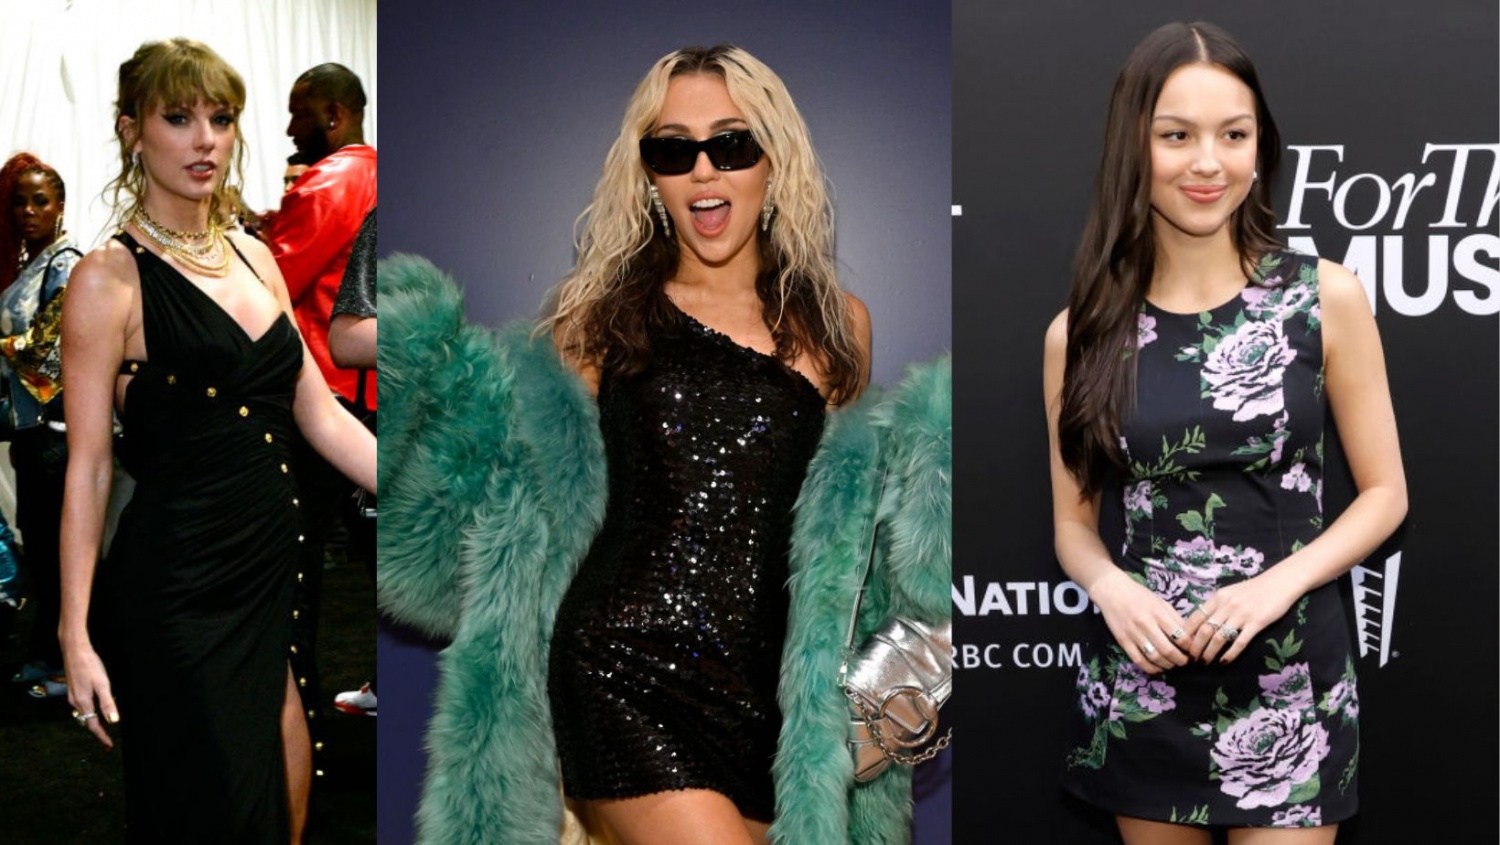 Female Artists Dominate 2023 Music Charts: Miley Cyrus, Taylor Swift, Mariah Carey, Olivia Rodrigo, Tate McRae